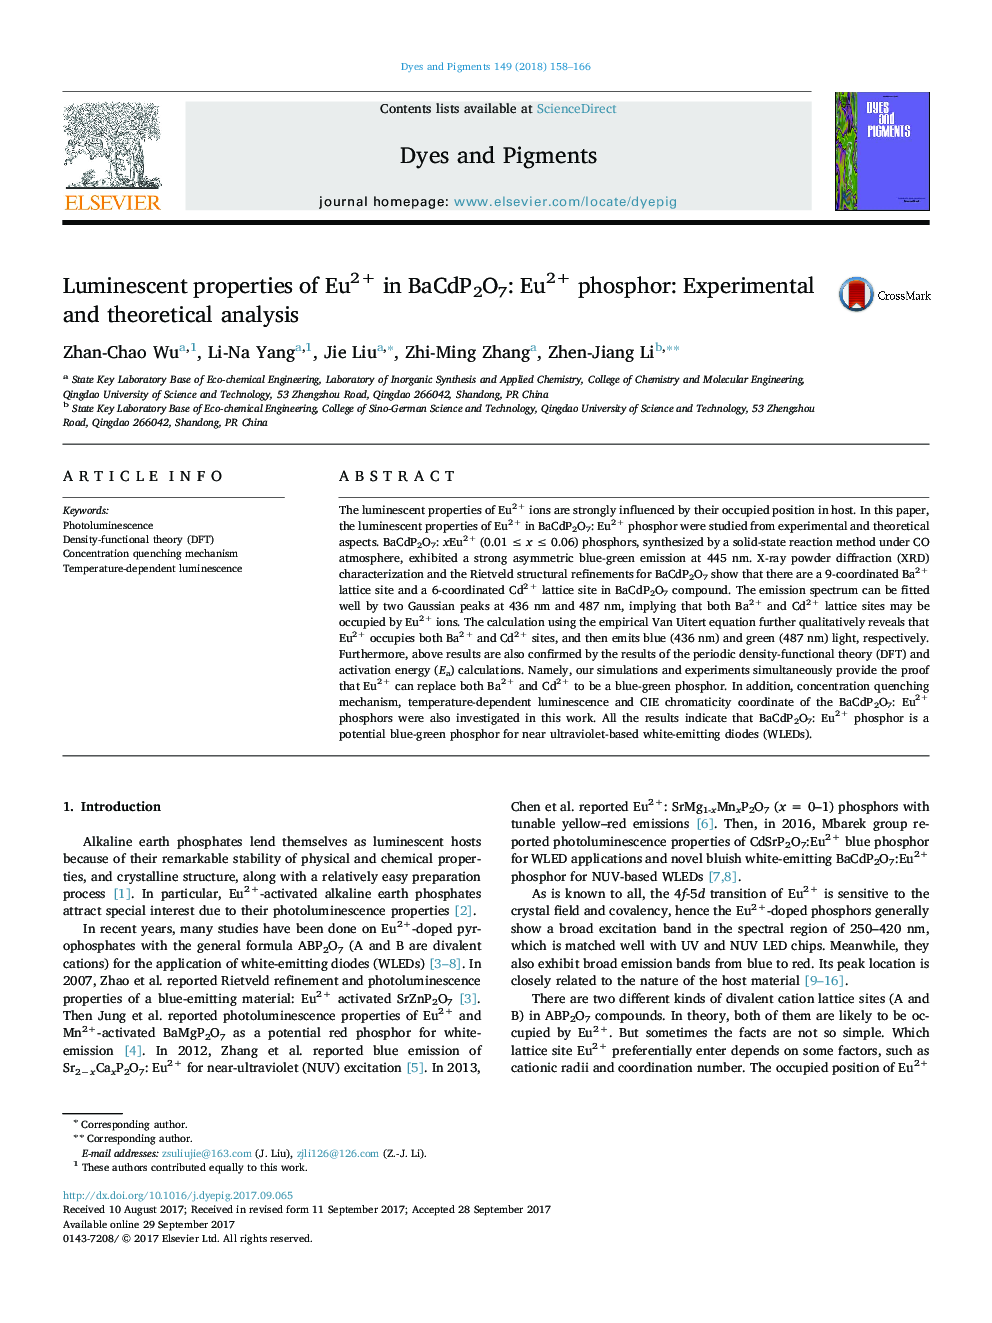 Luminescent properties of Eu2+ in BaCdP2O7: Eu2+ phosphor: Experimental and theoretical analysis